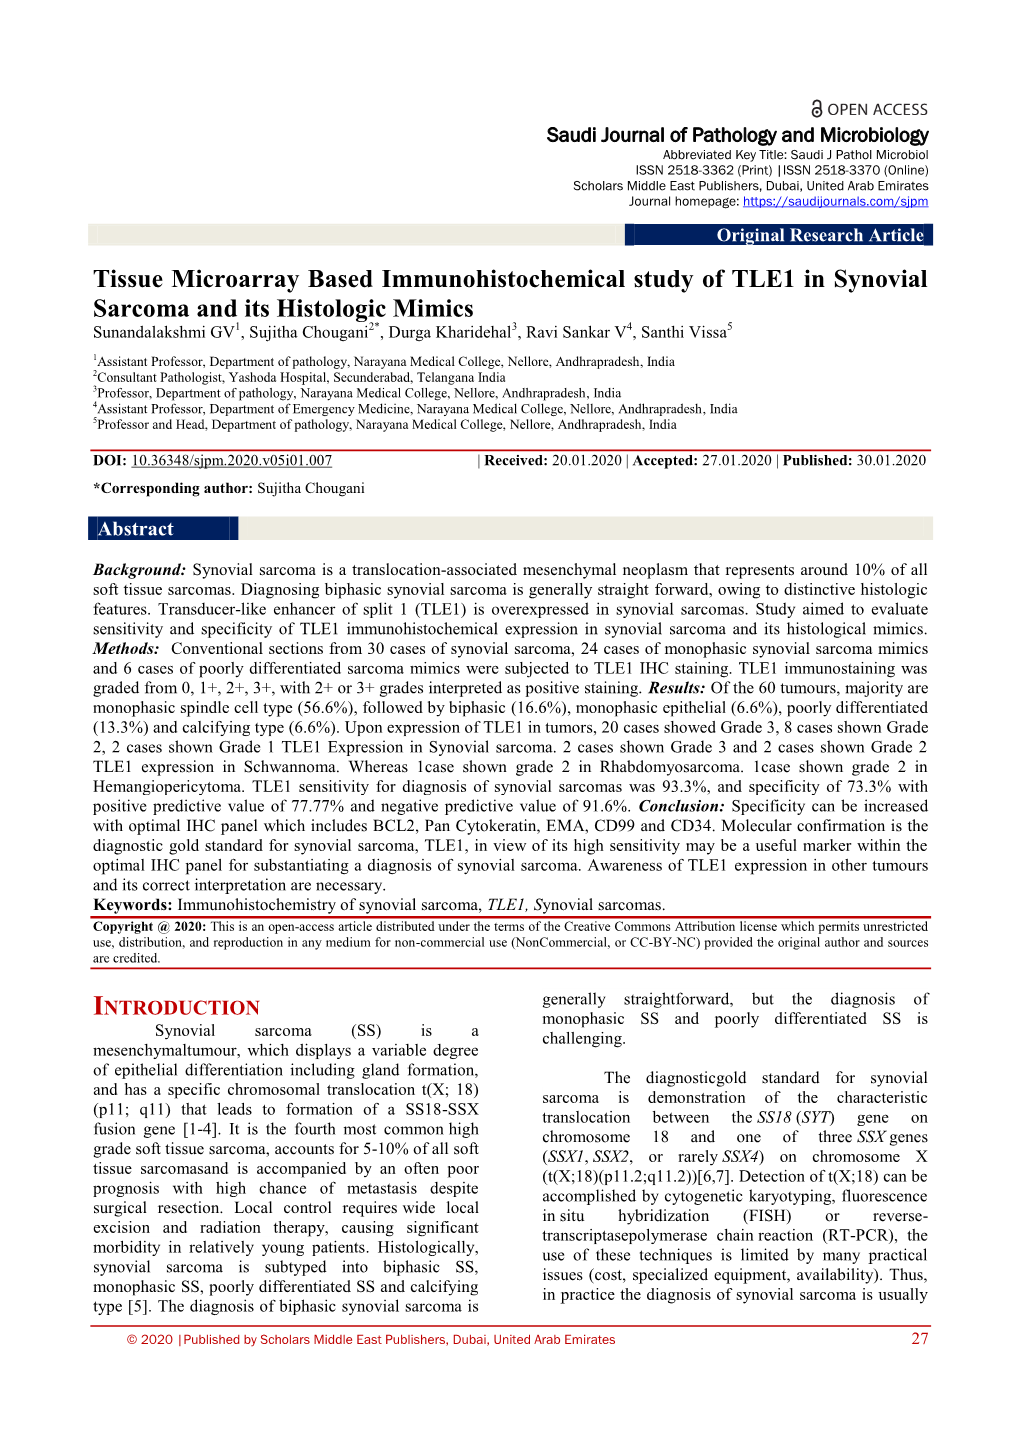 Tissue Microarray Based Immunohistochemical Study Of